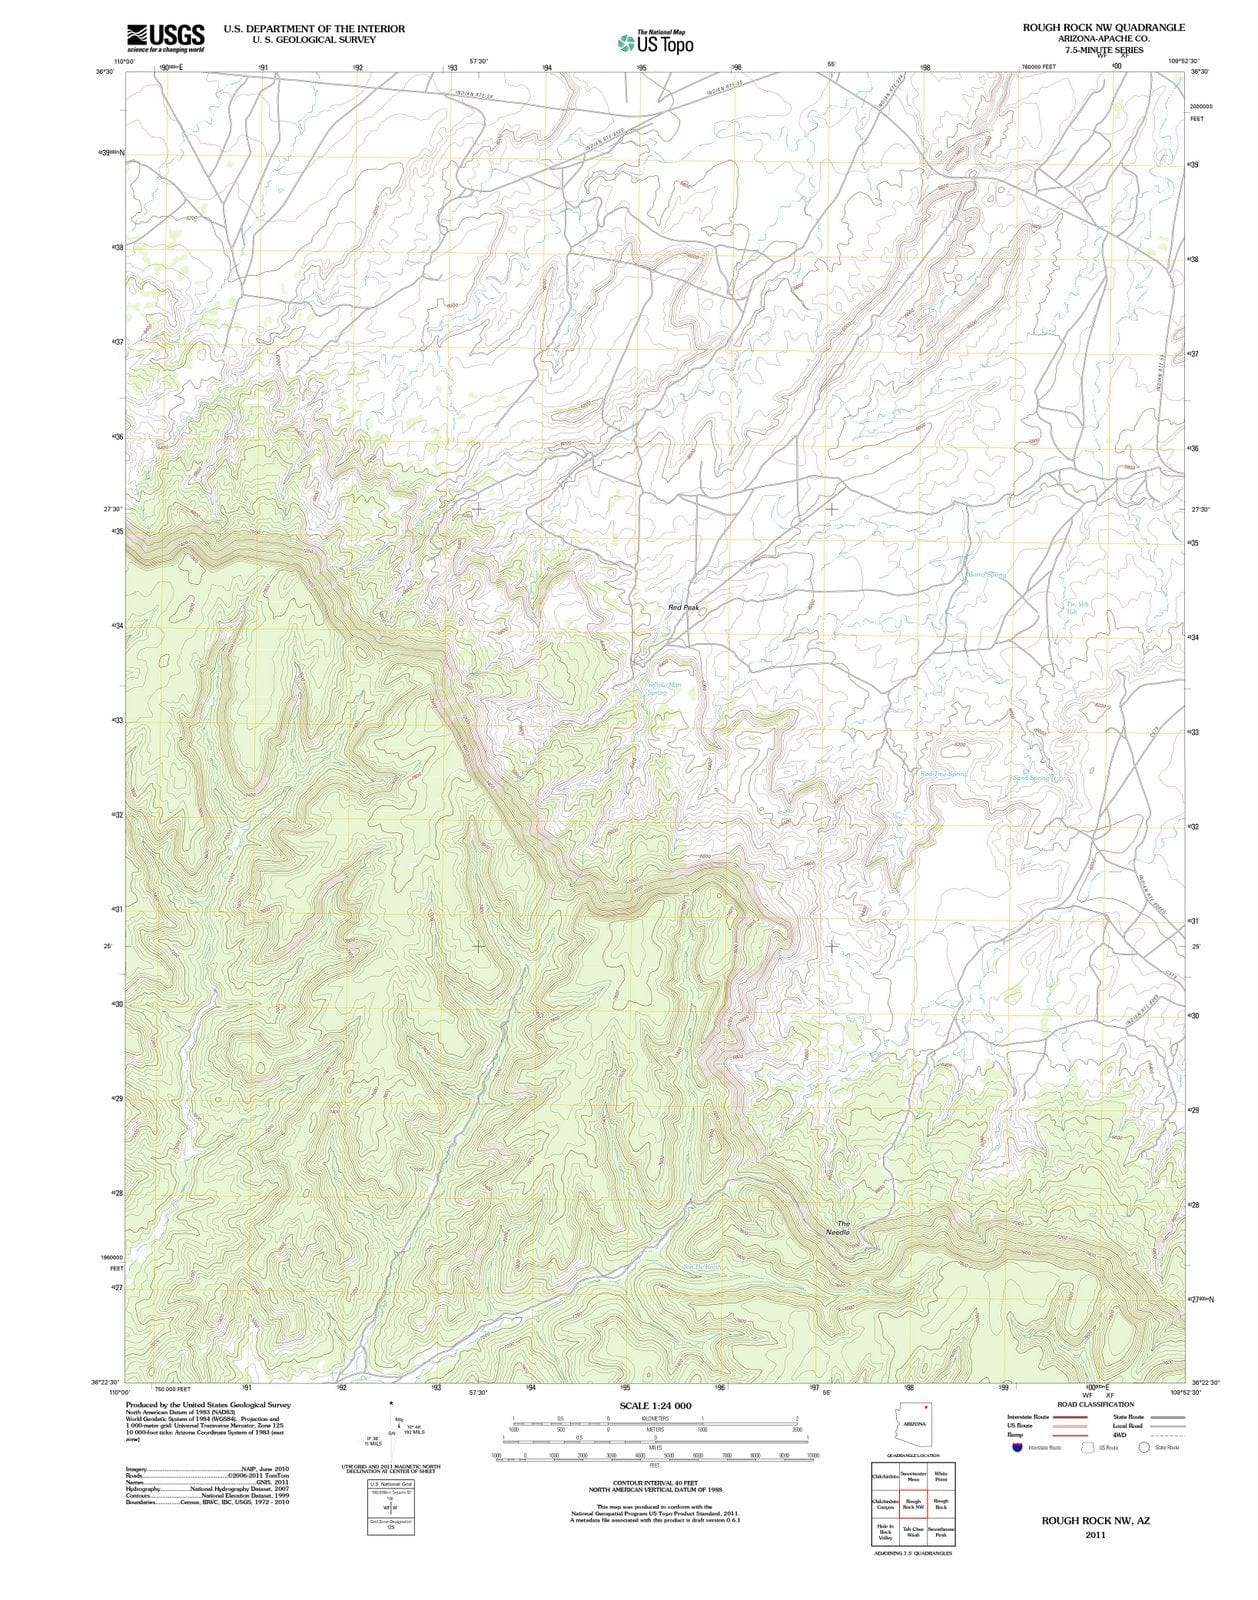 2011 Rough Rock, AZ - Arizona - USGS Topographic Map